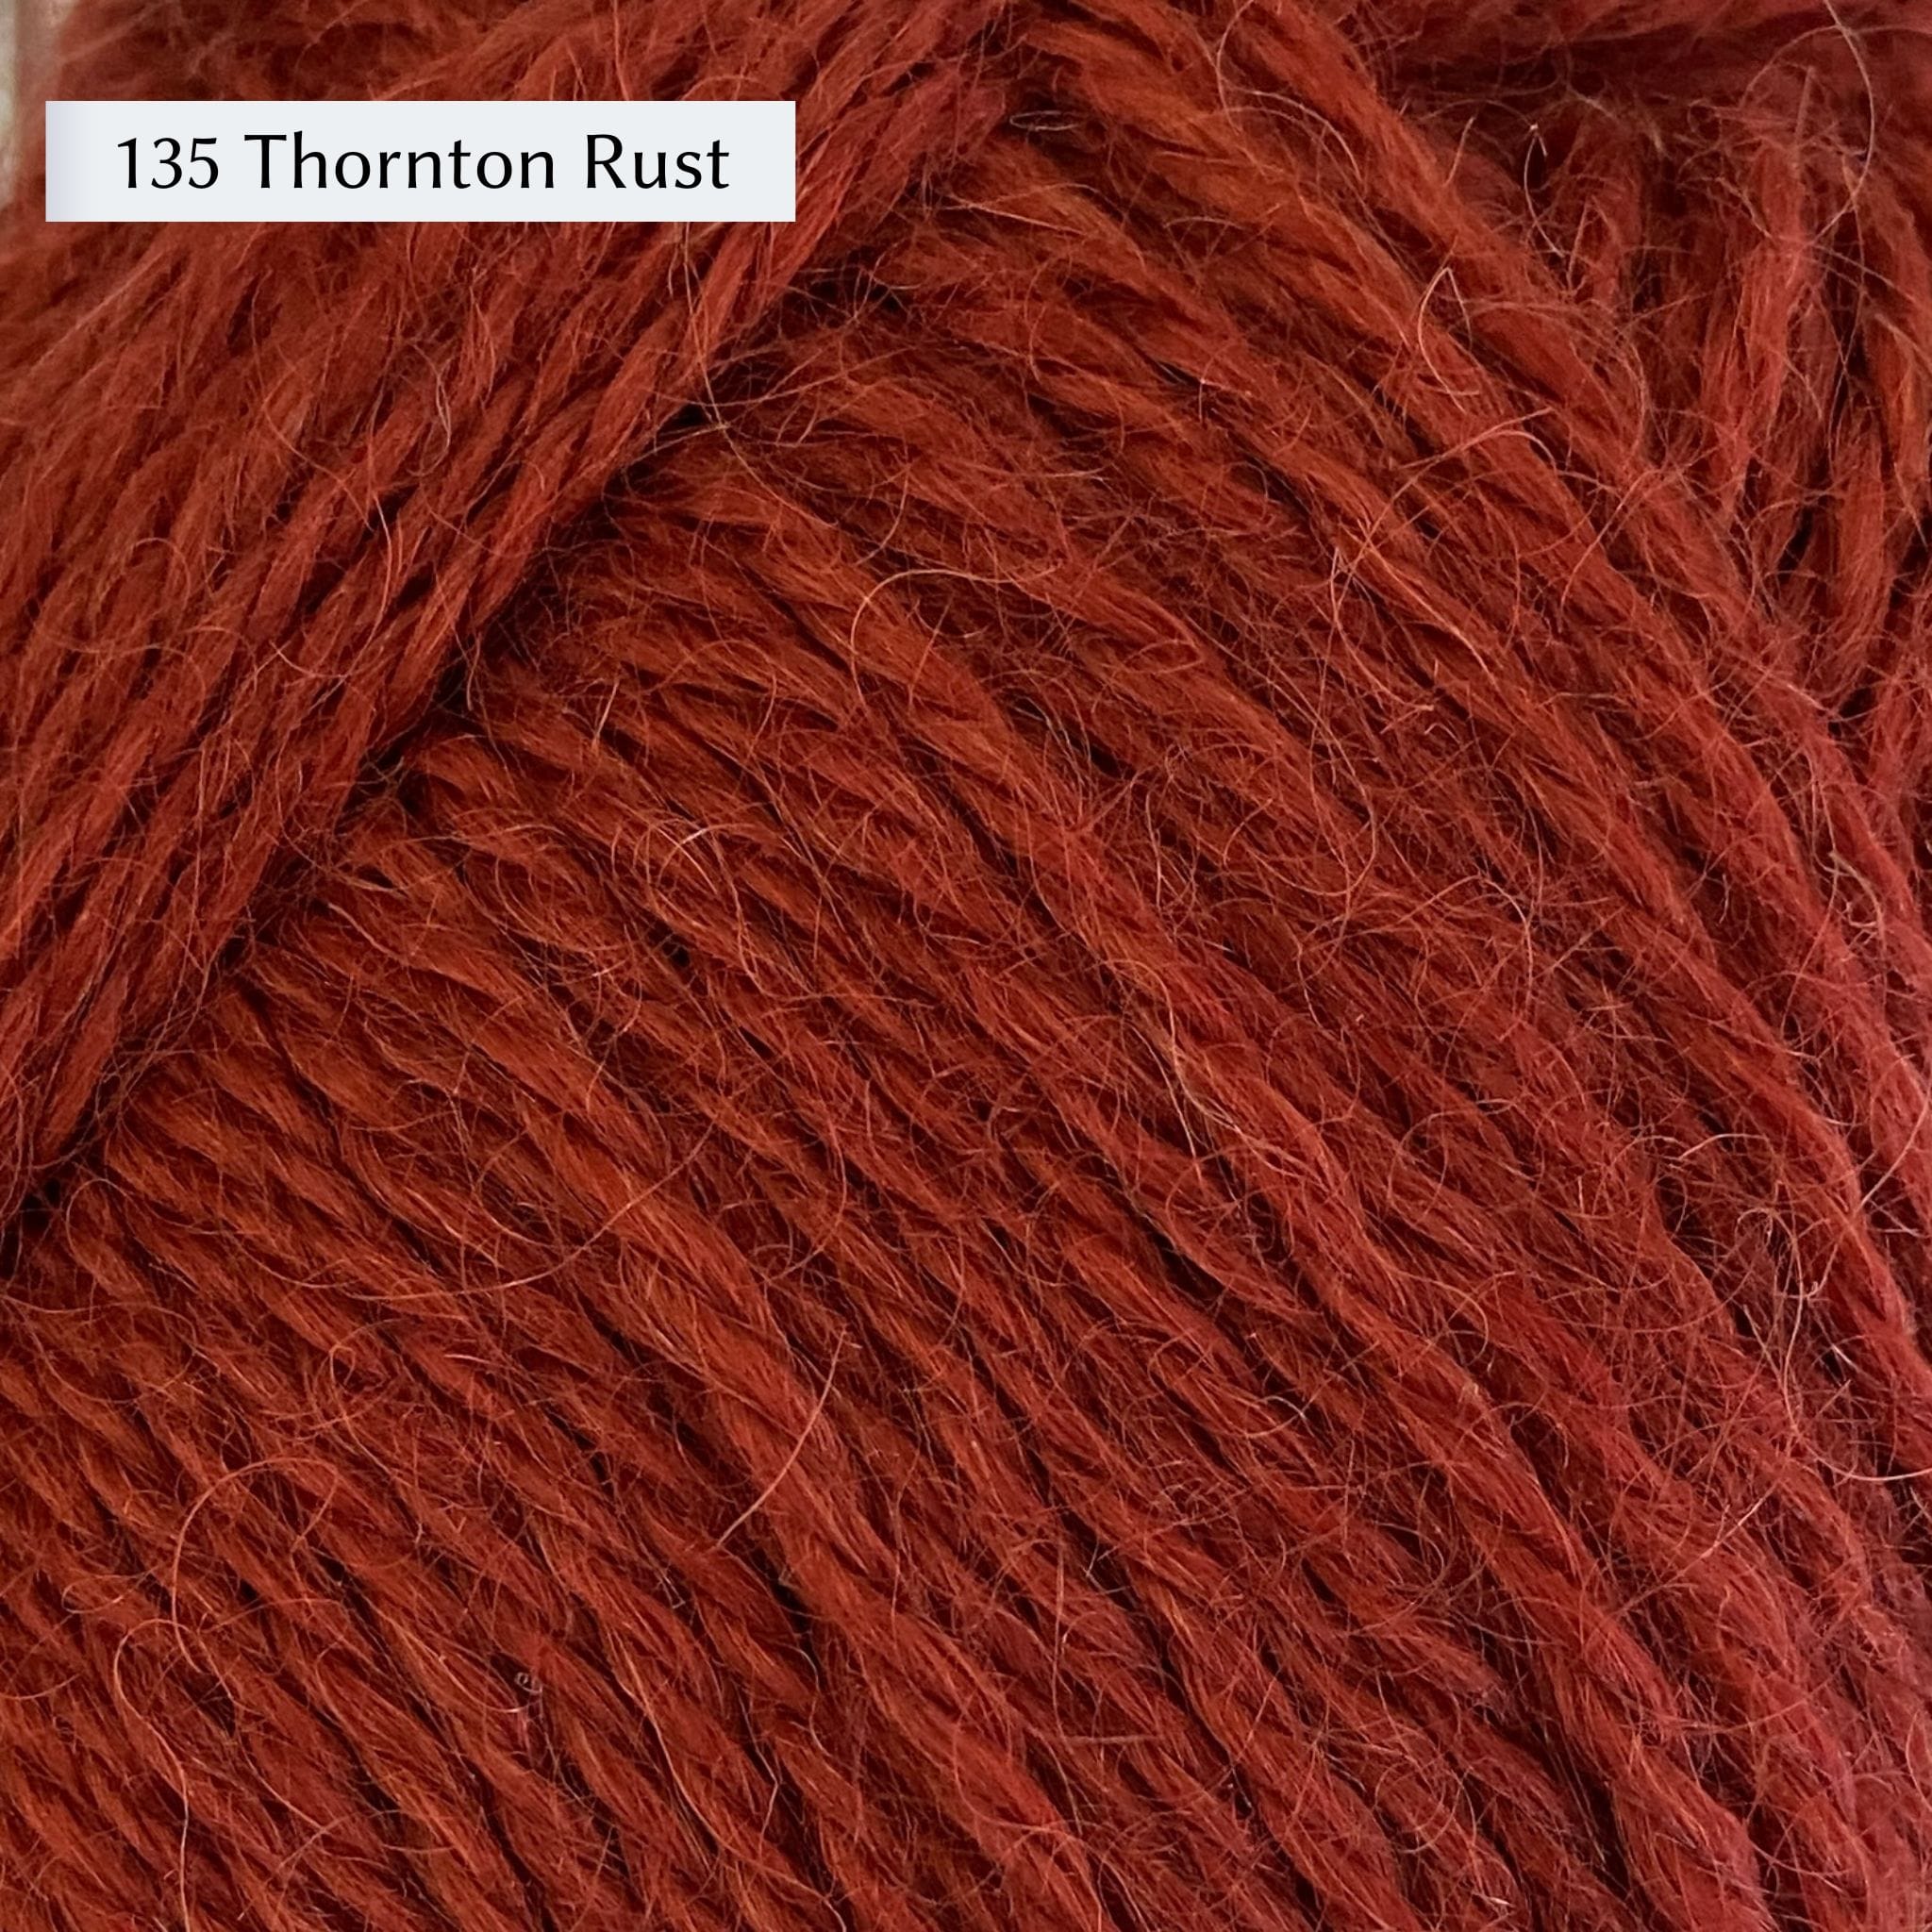 Wensleydale Longwool Aran, an aran weight yarn made from Wensleydale sheep, in color 135 Thornton Rust, a warm rusty red